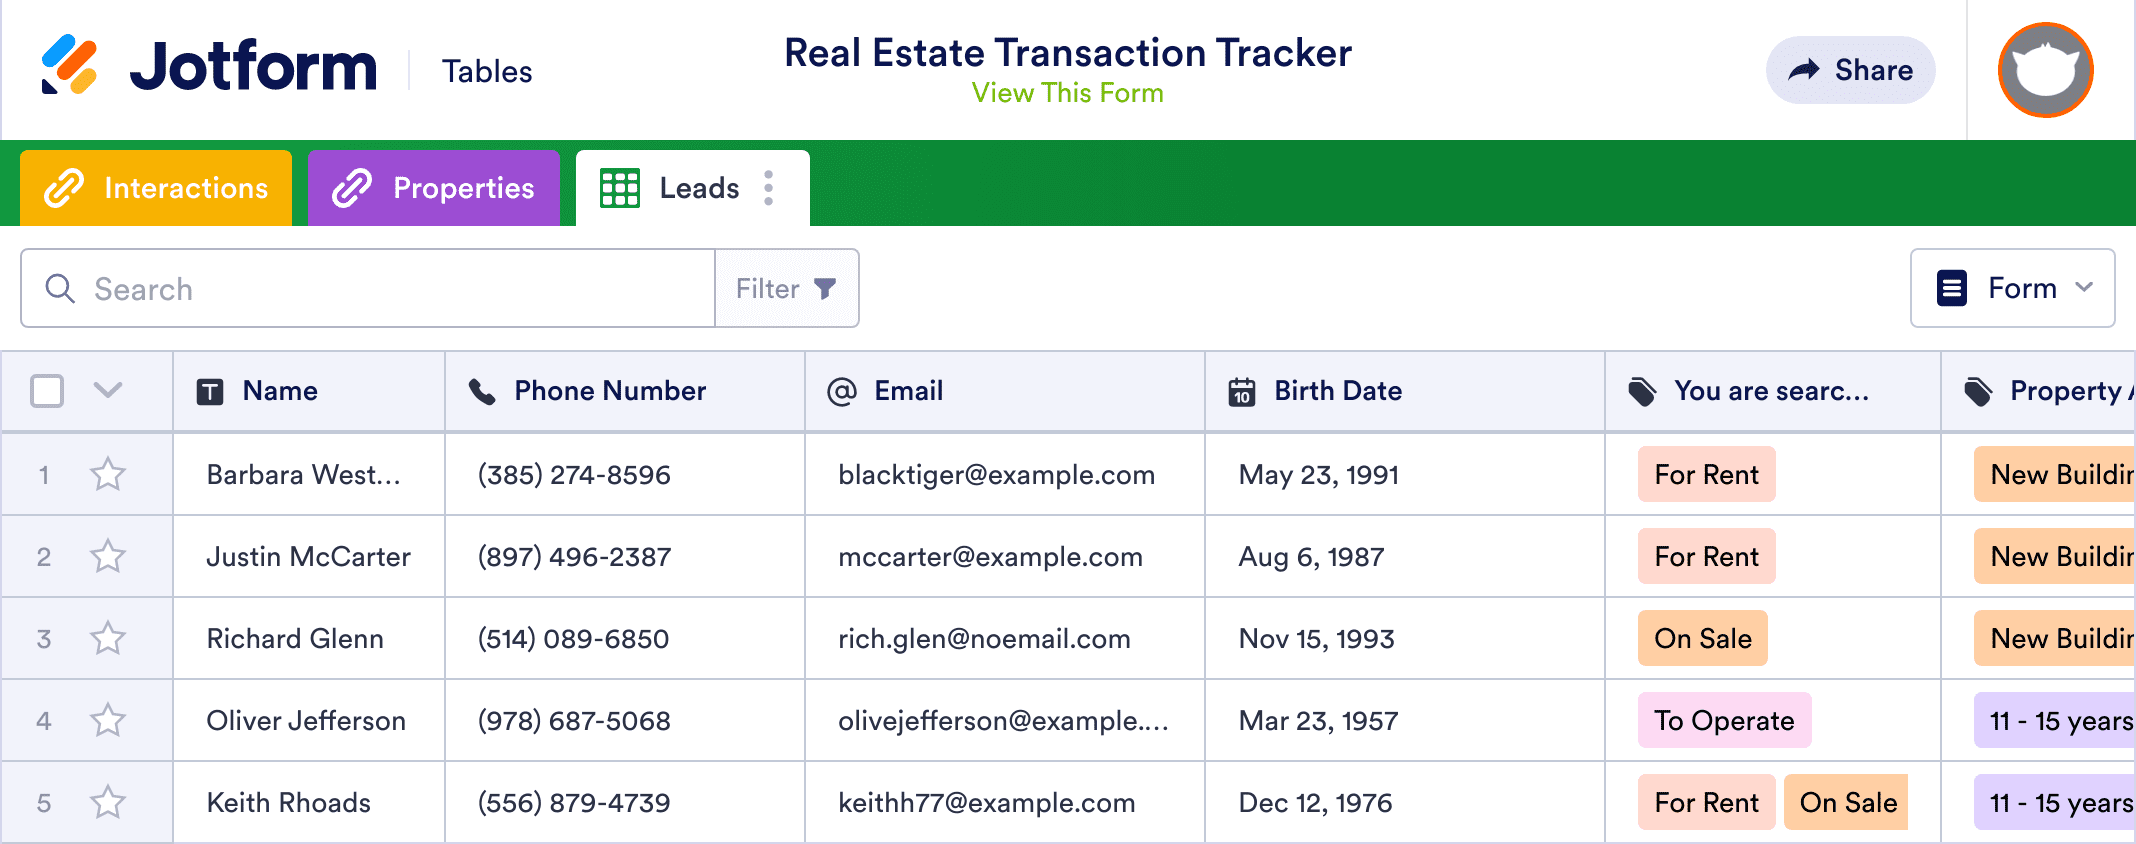 Real Estate Transaction Tracker Template Jotform Tables